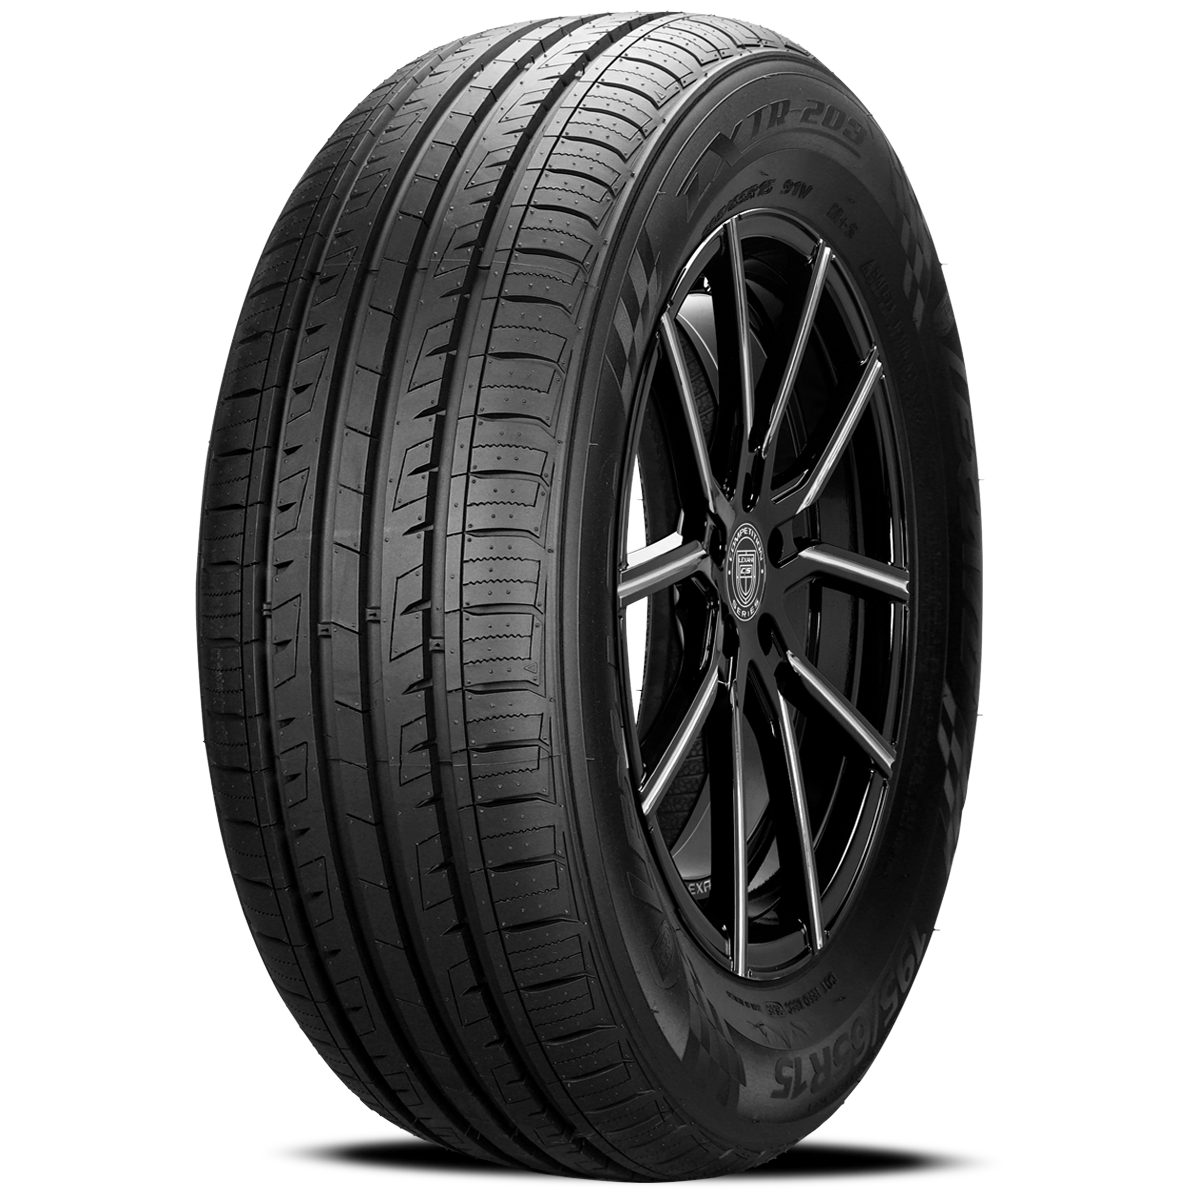 LEXANI LXTR-203 215/65R16 (27X8.5R 16) Tires